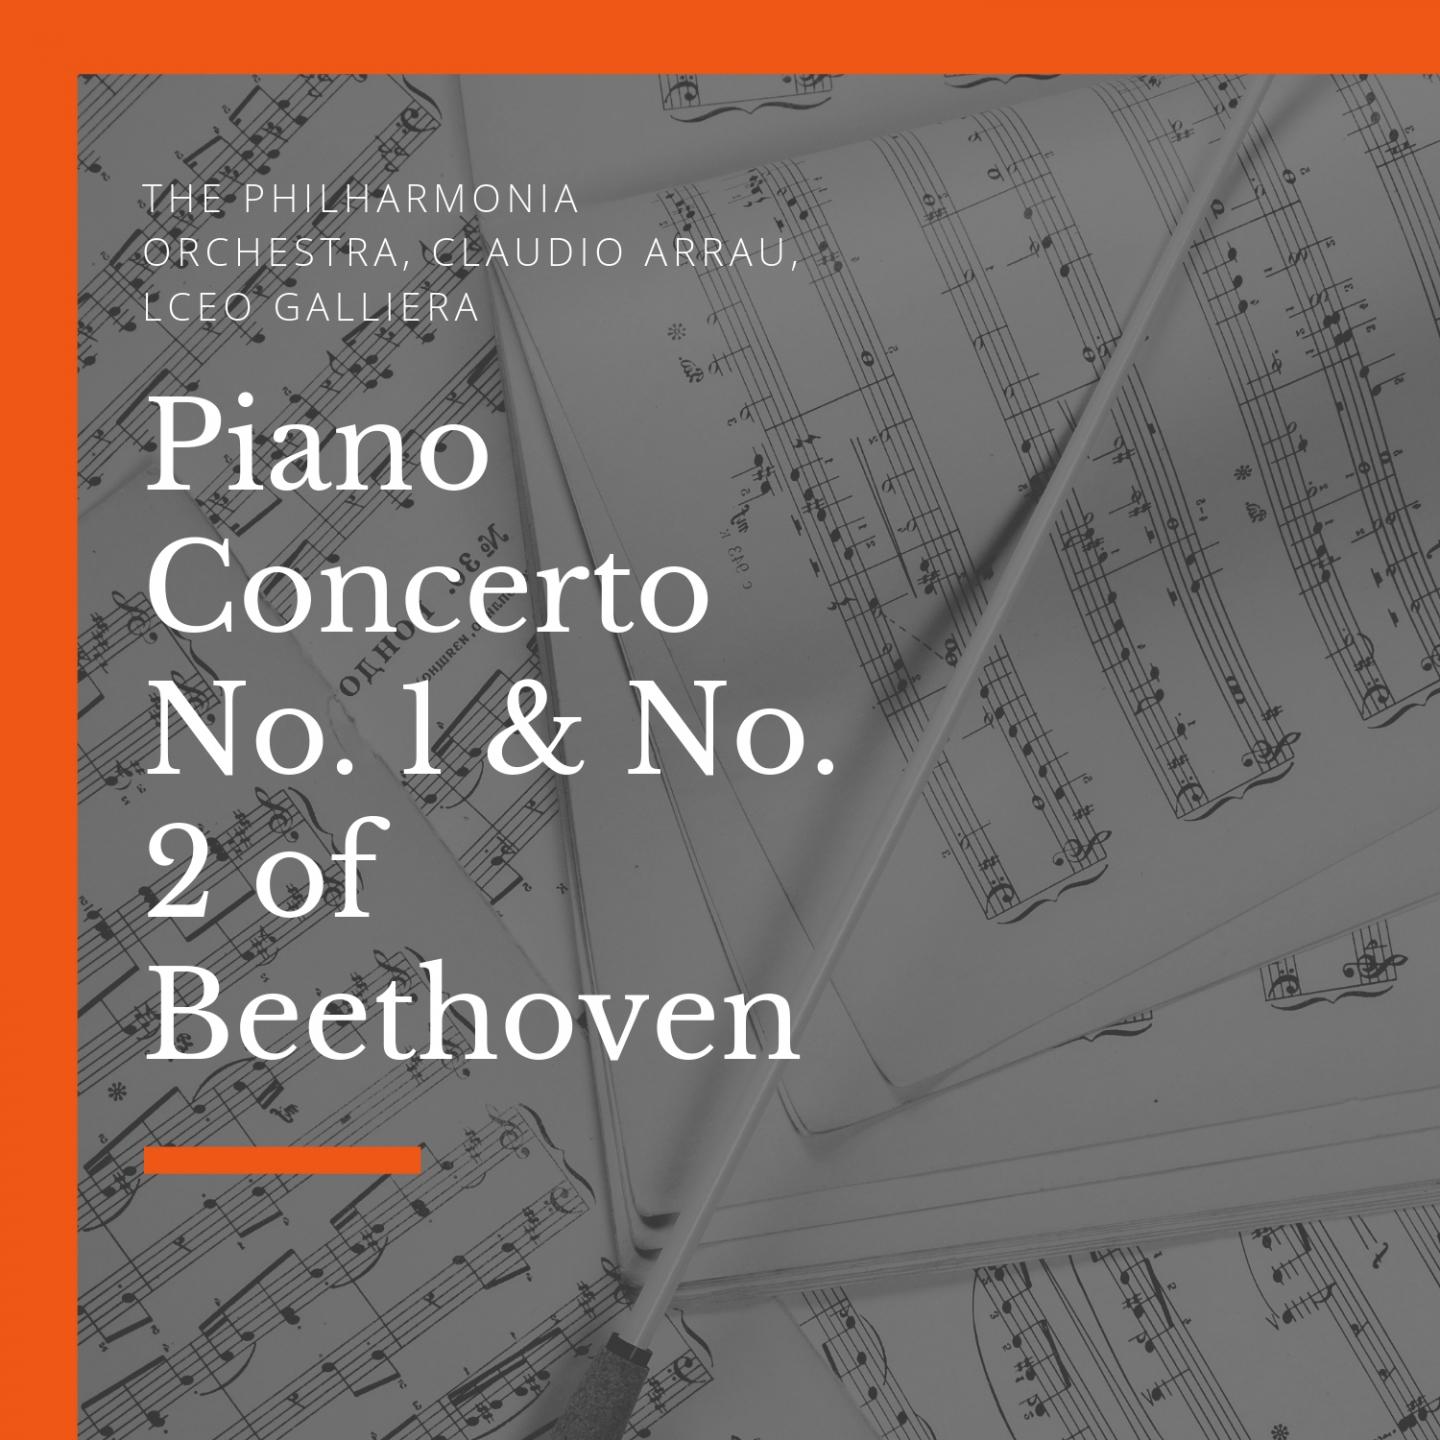 Piano Concerto No. 1 & No. 2 of Beethoven